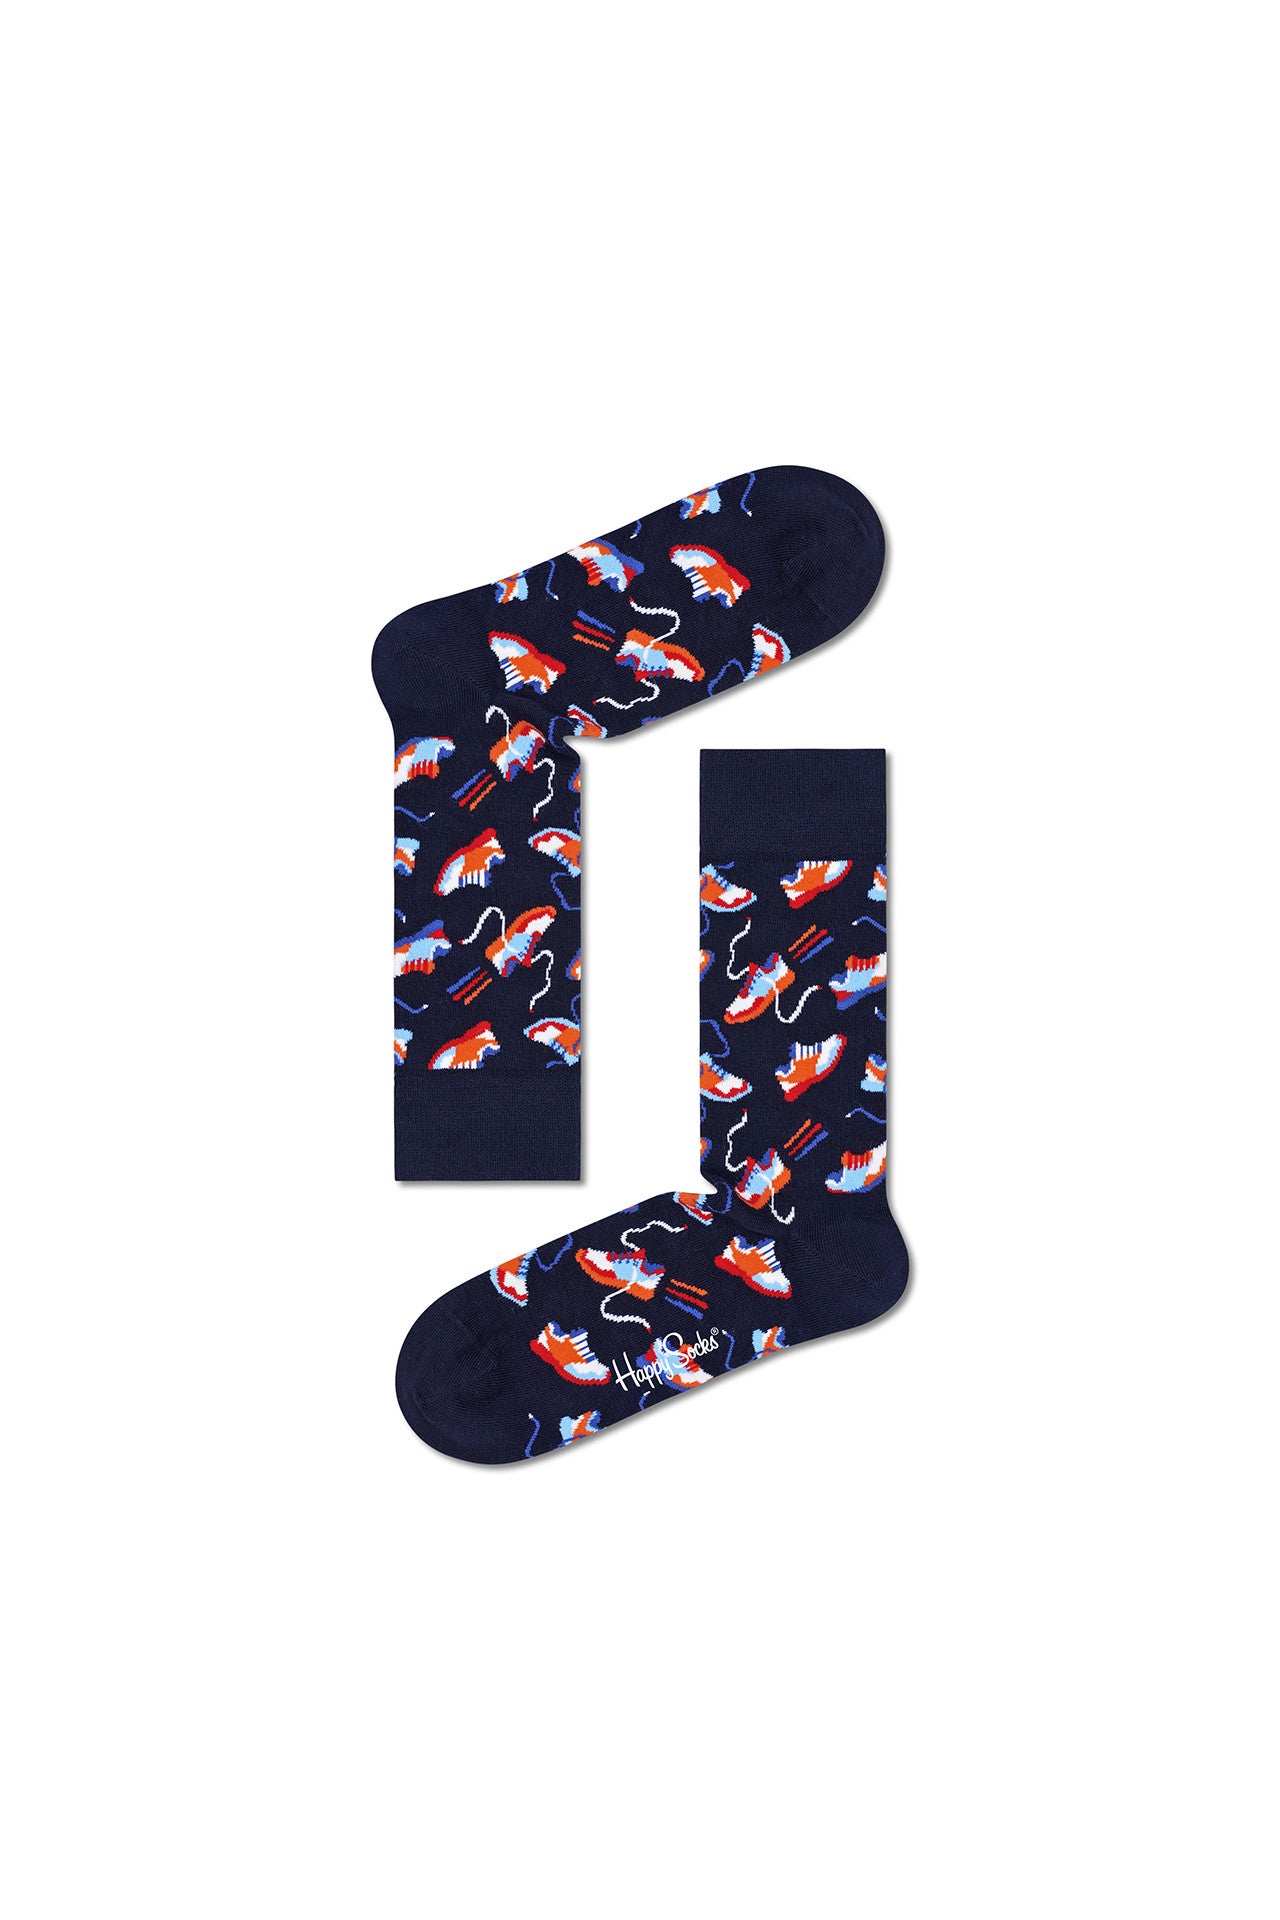 Happy Socks Run For It Socks Navy Multicolour